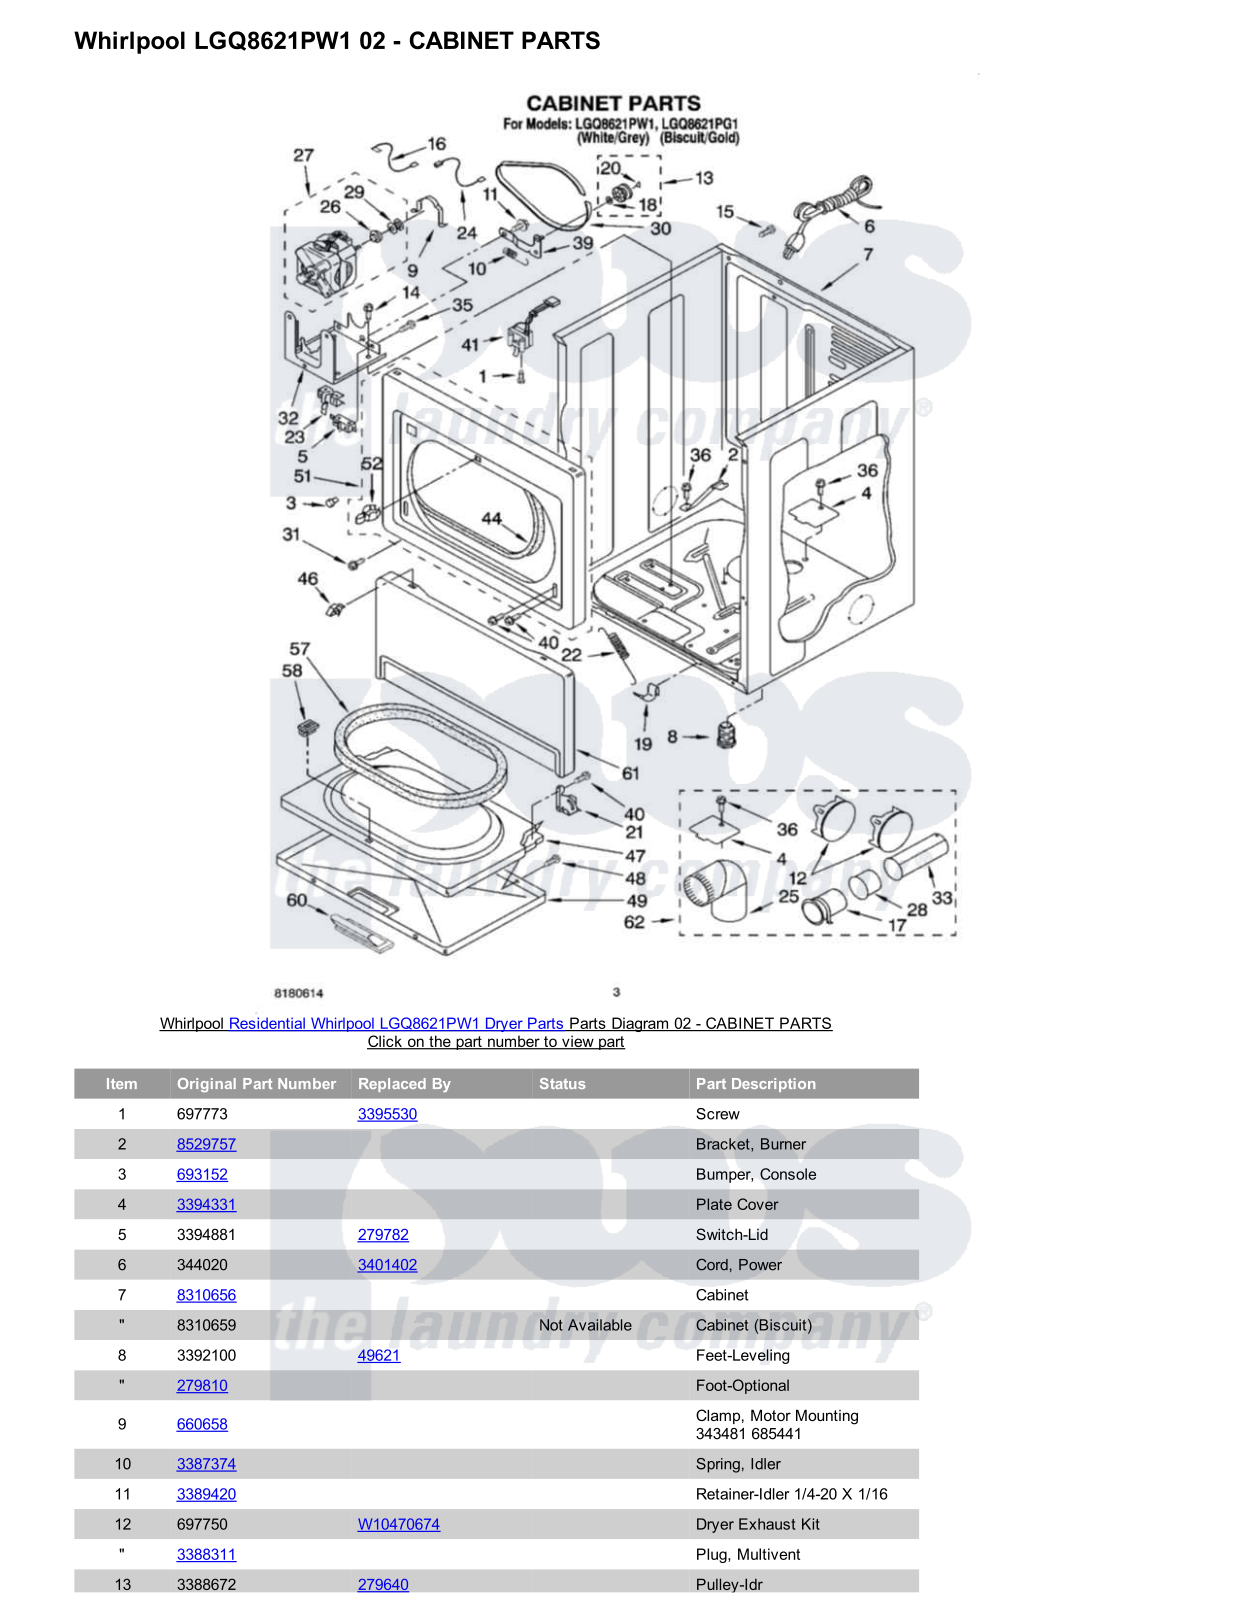 Whirlpool LGQ8621PW1 Parts Diagram